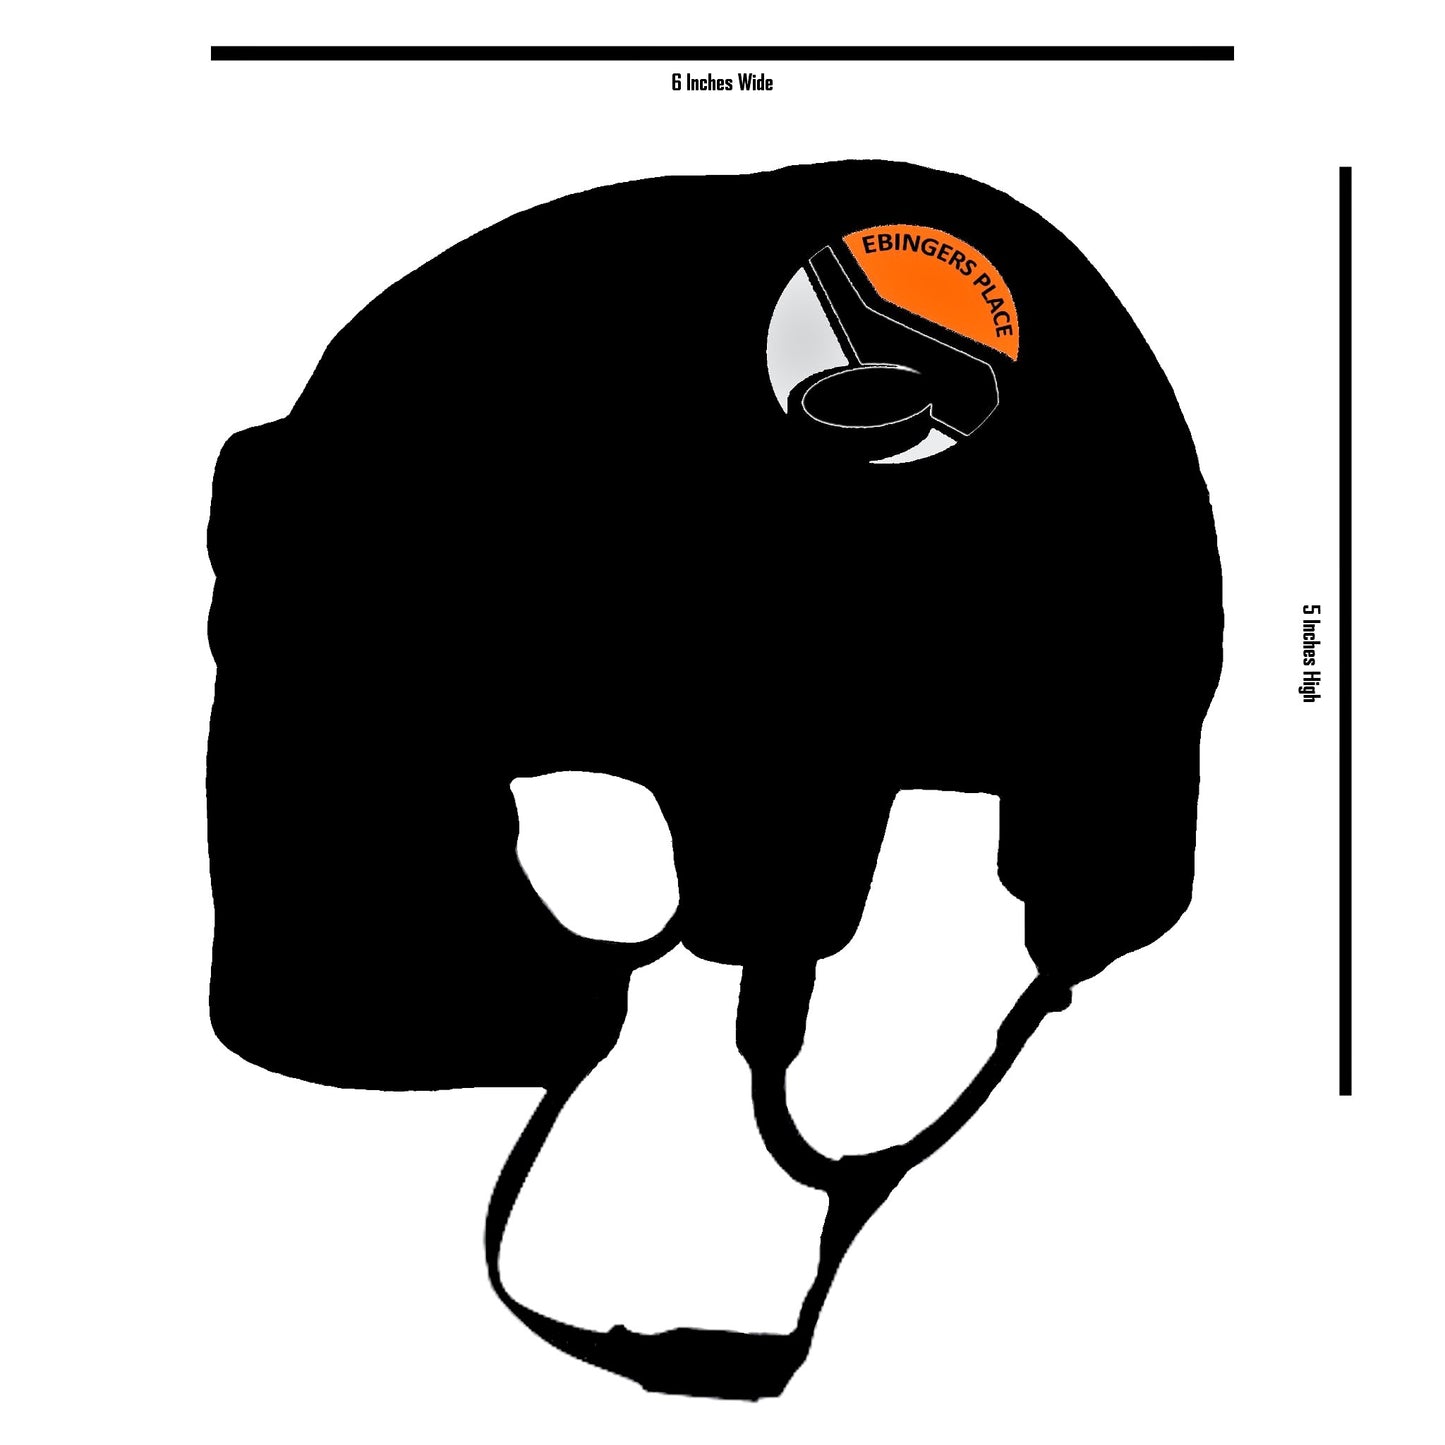 Edmonton Oilers White Unsigned Collectible Mini Hockey Helmet